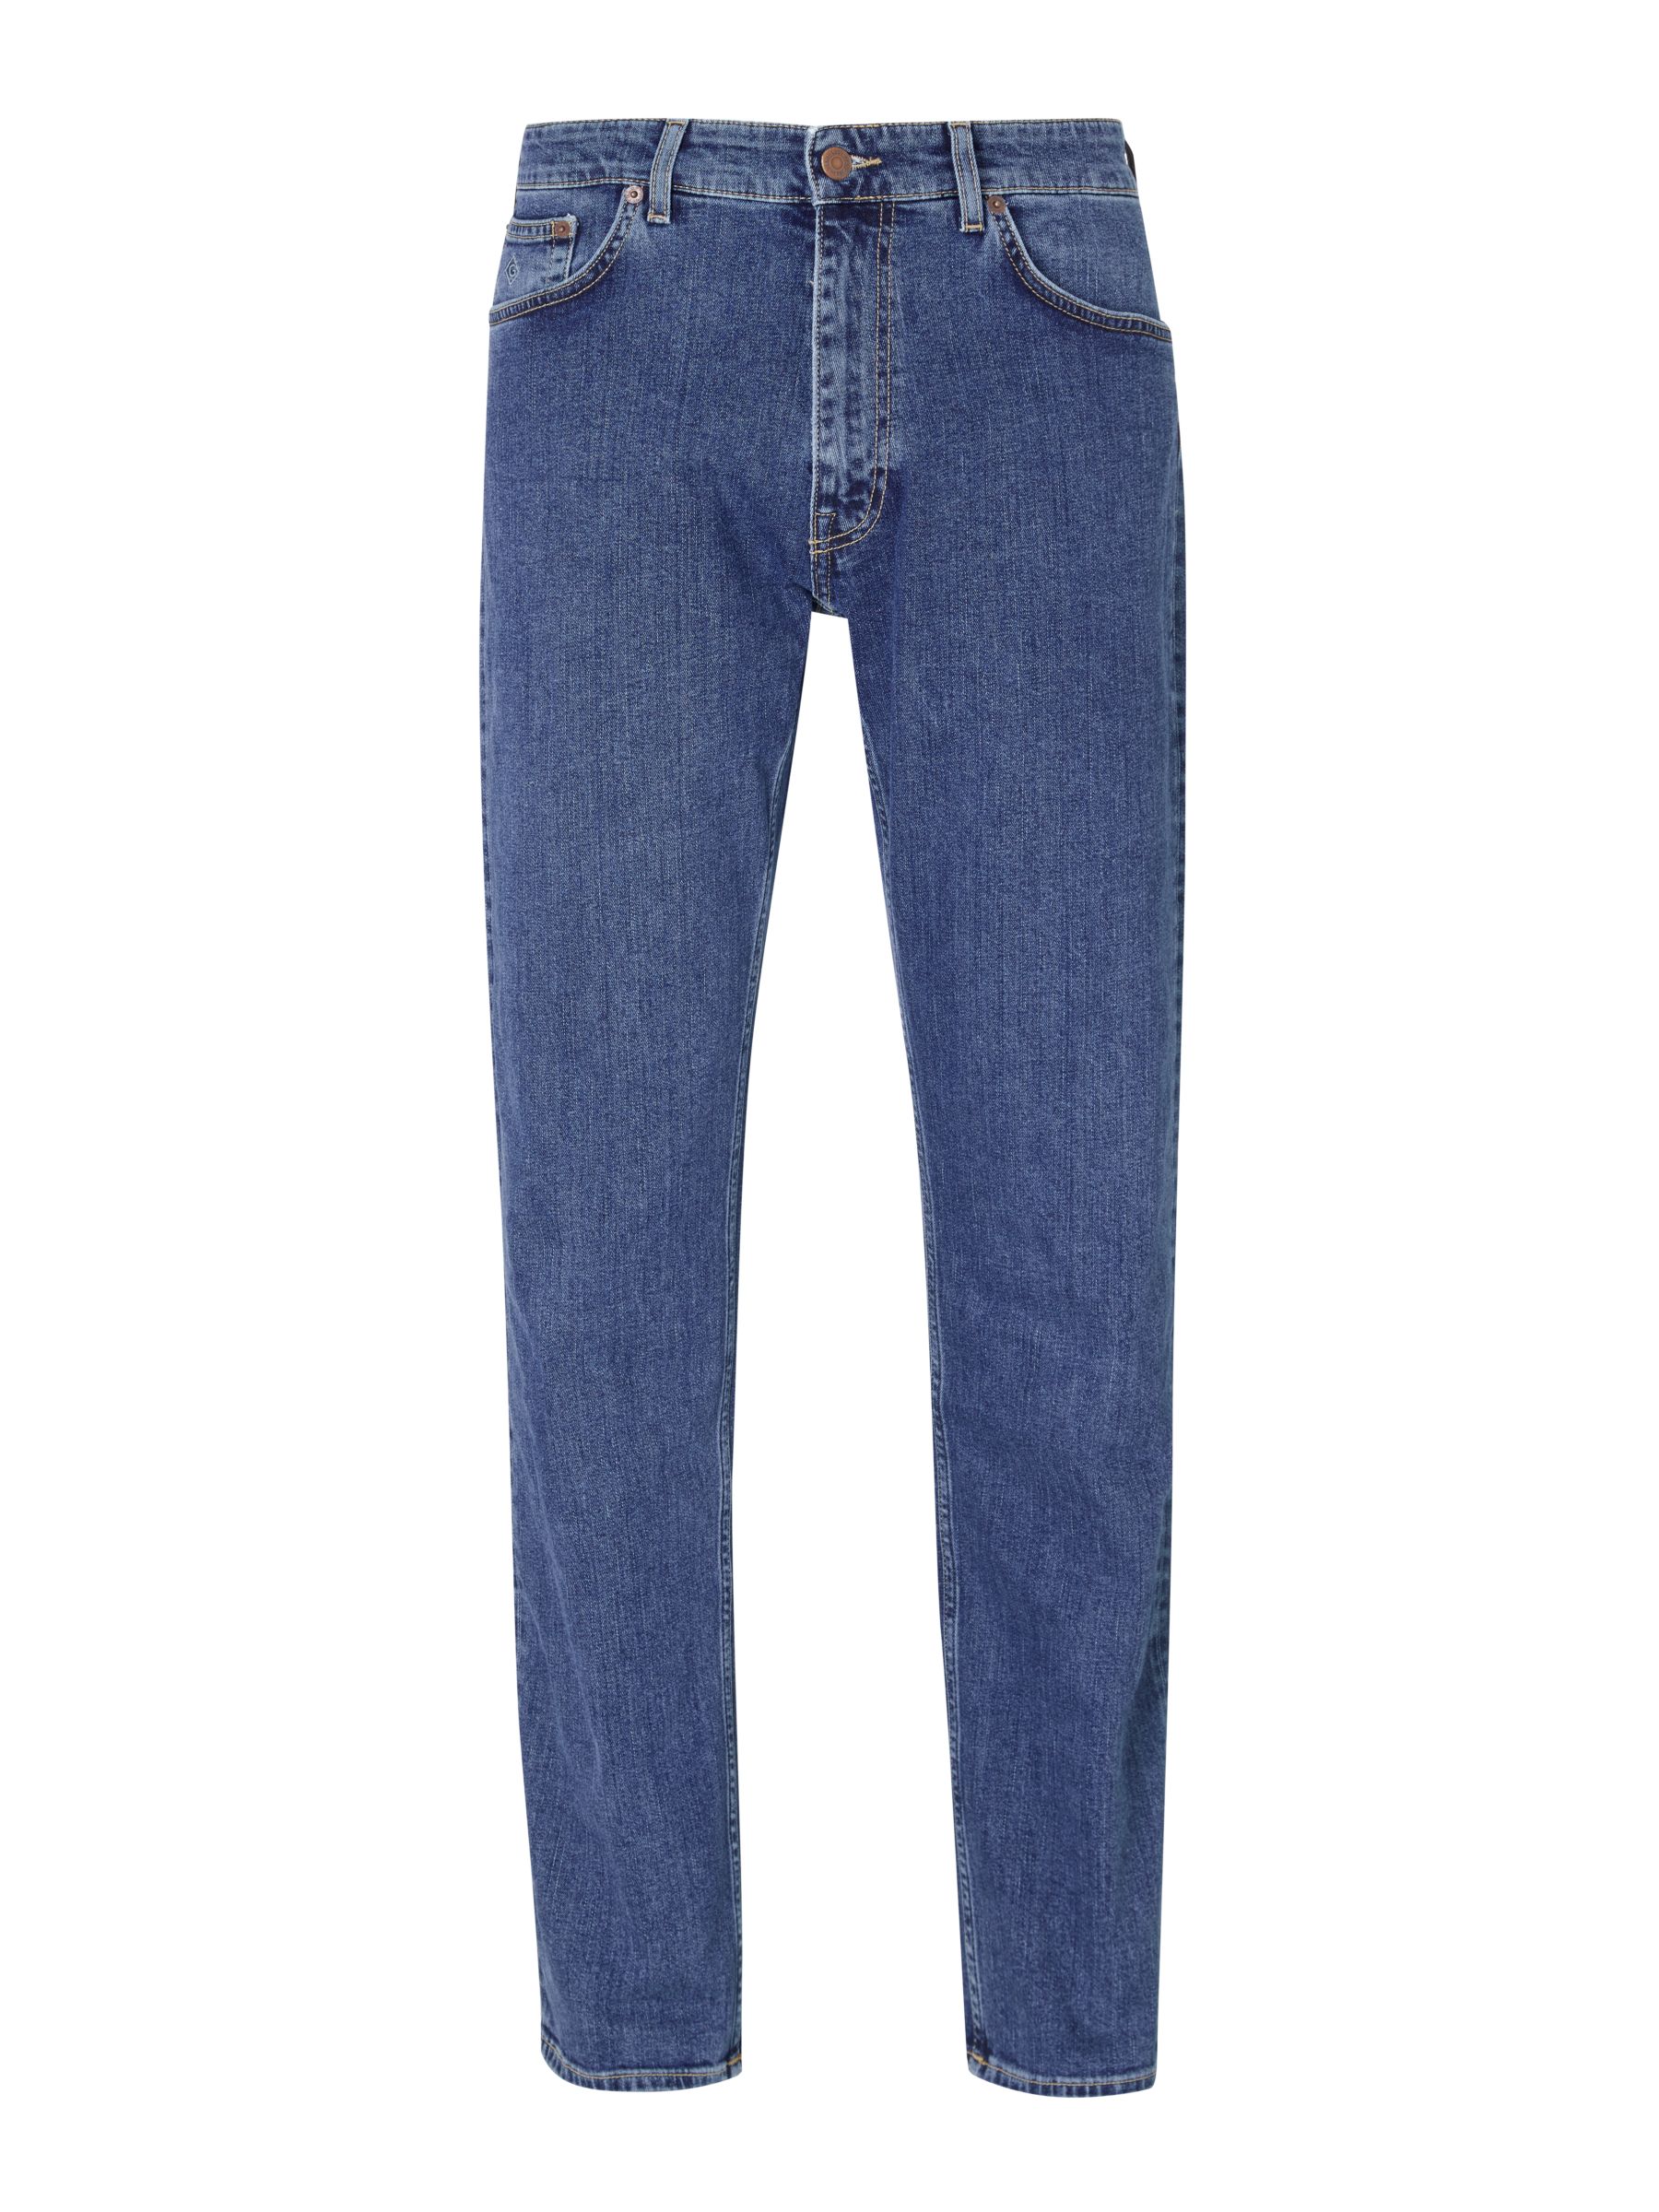 GANT 11 oz Comfort Regular Straight Jeans, Mid Blue at John Lewis ...